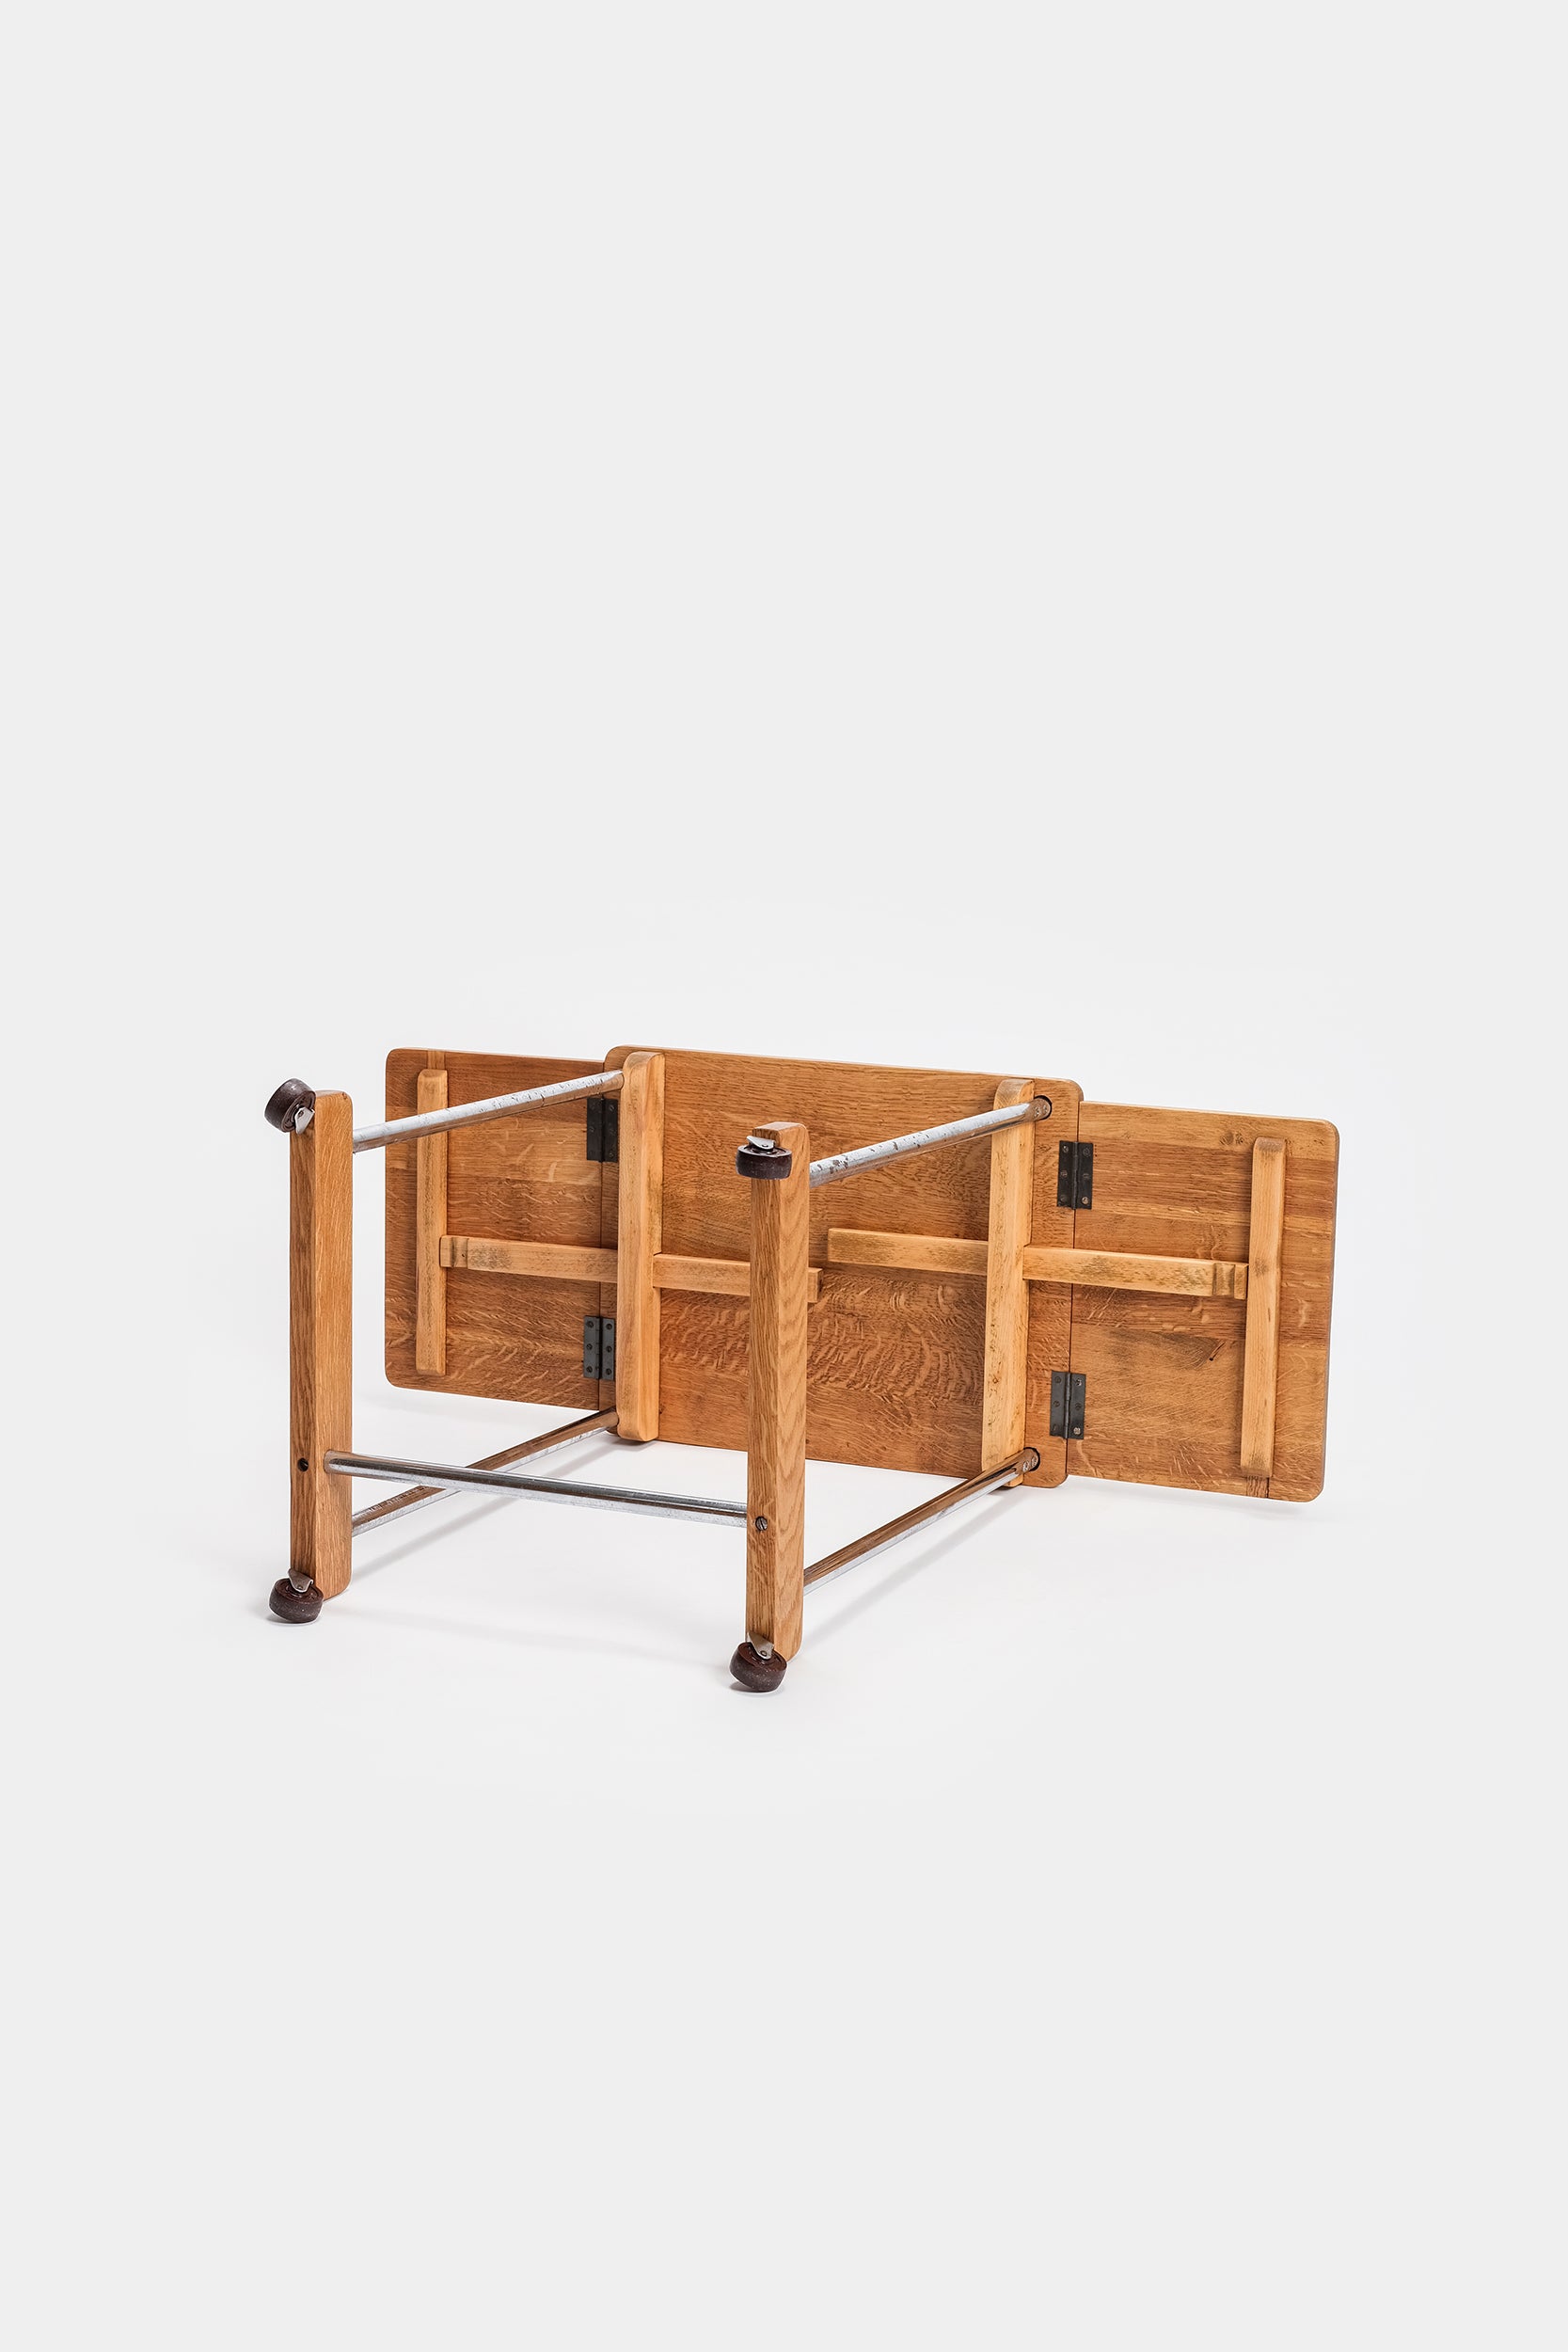 Small Work Table, Bauhaus, 20s